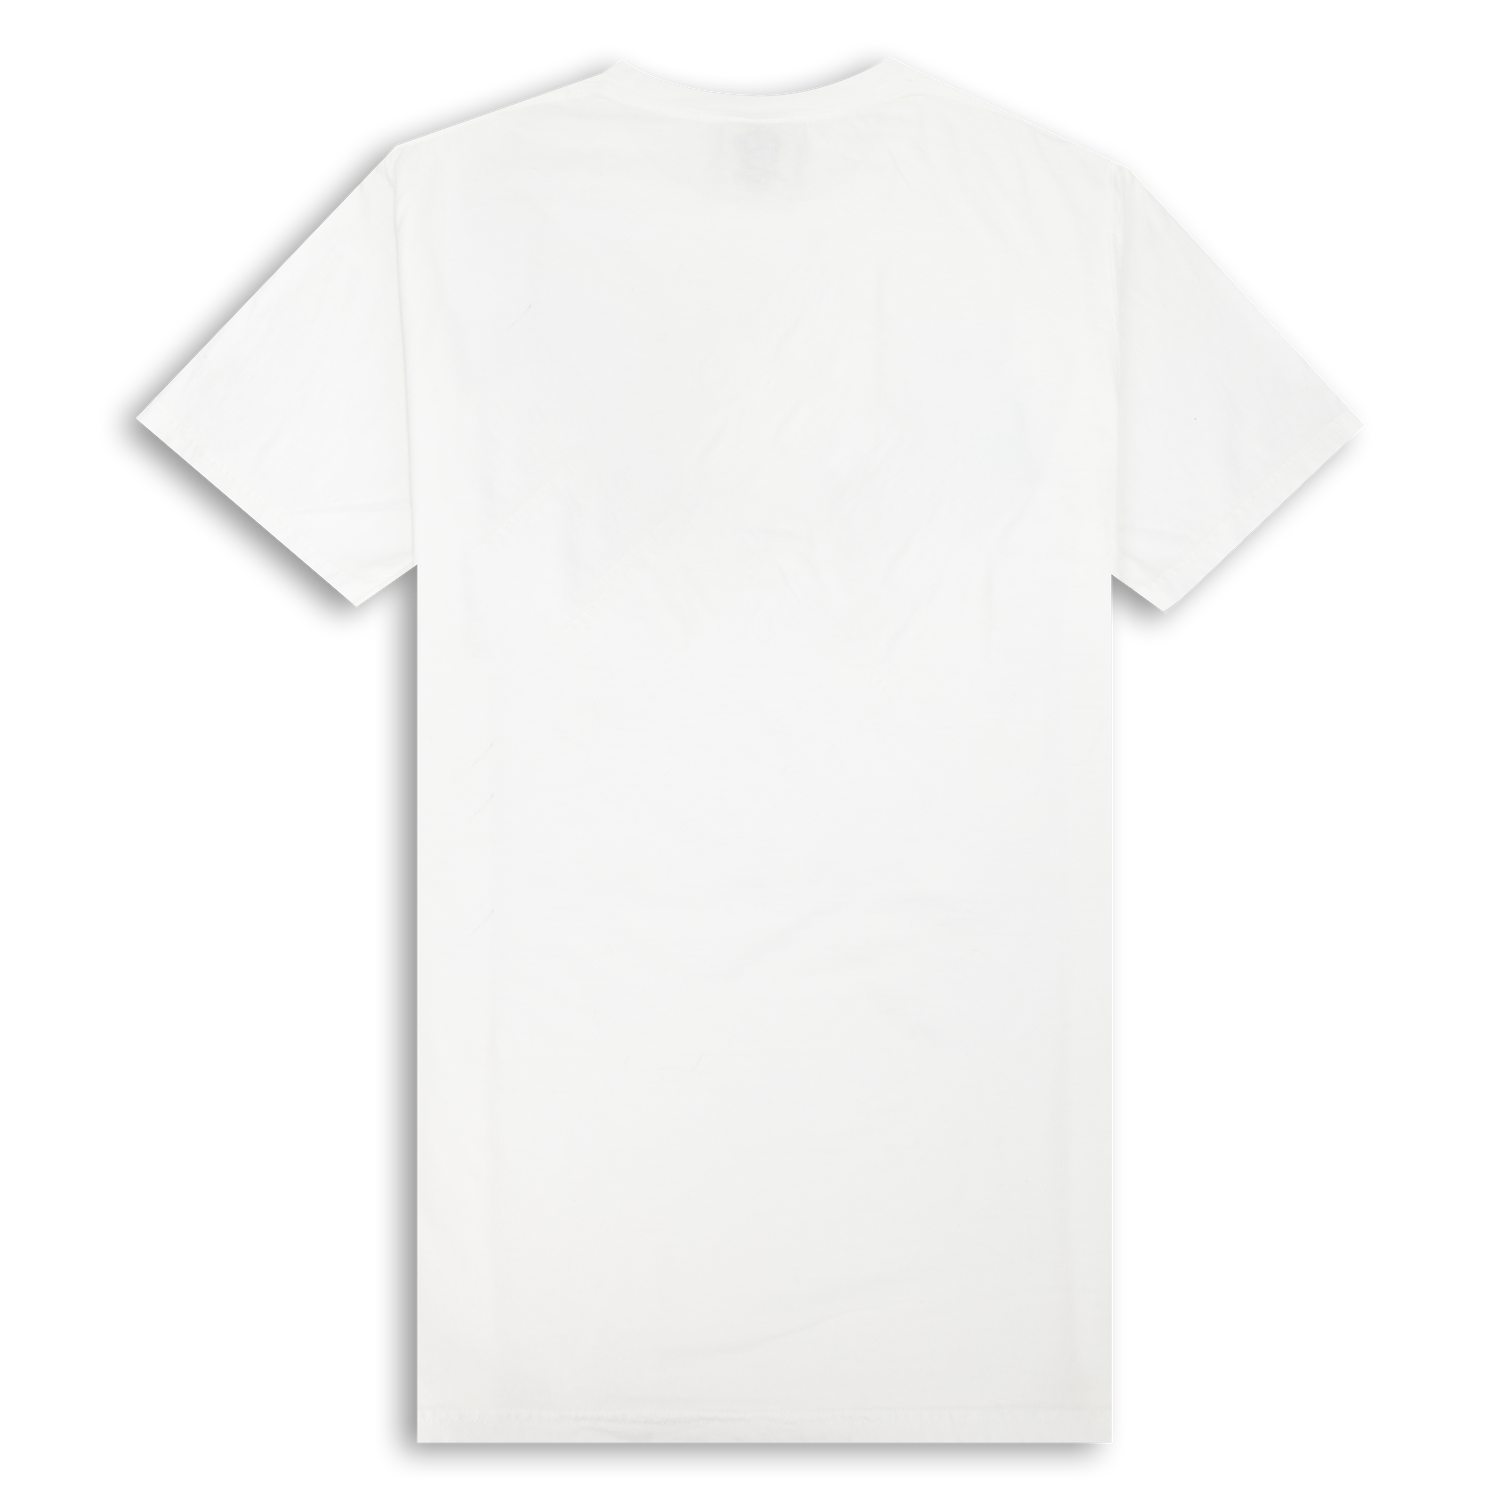 Texas A&M Simple Lonestar State White T-Shirt